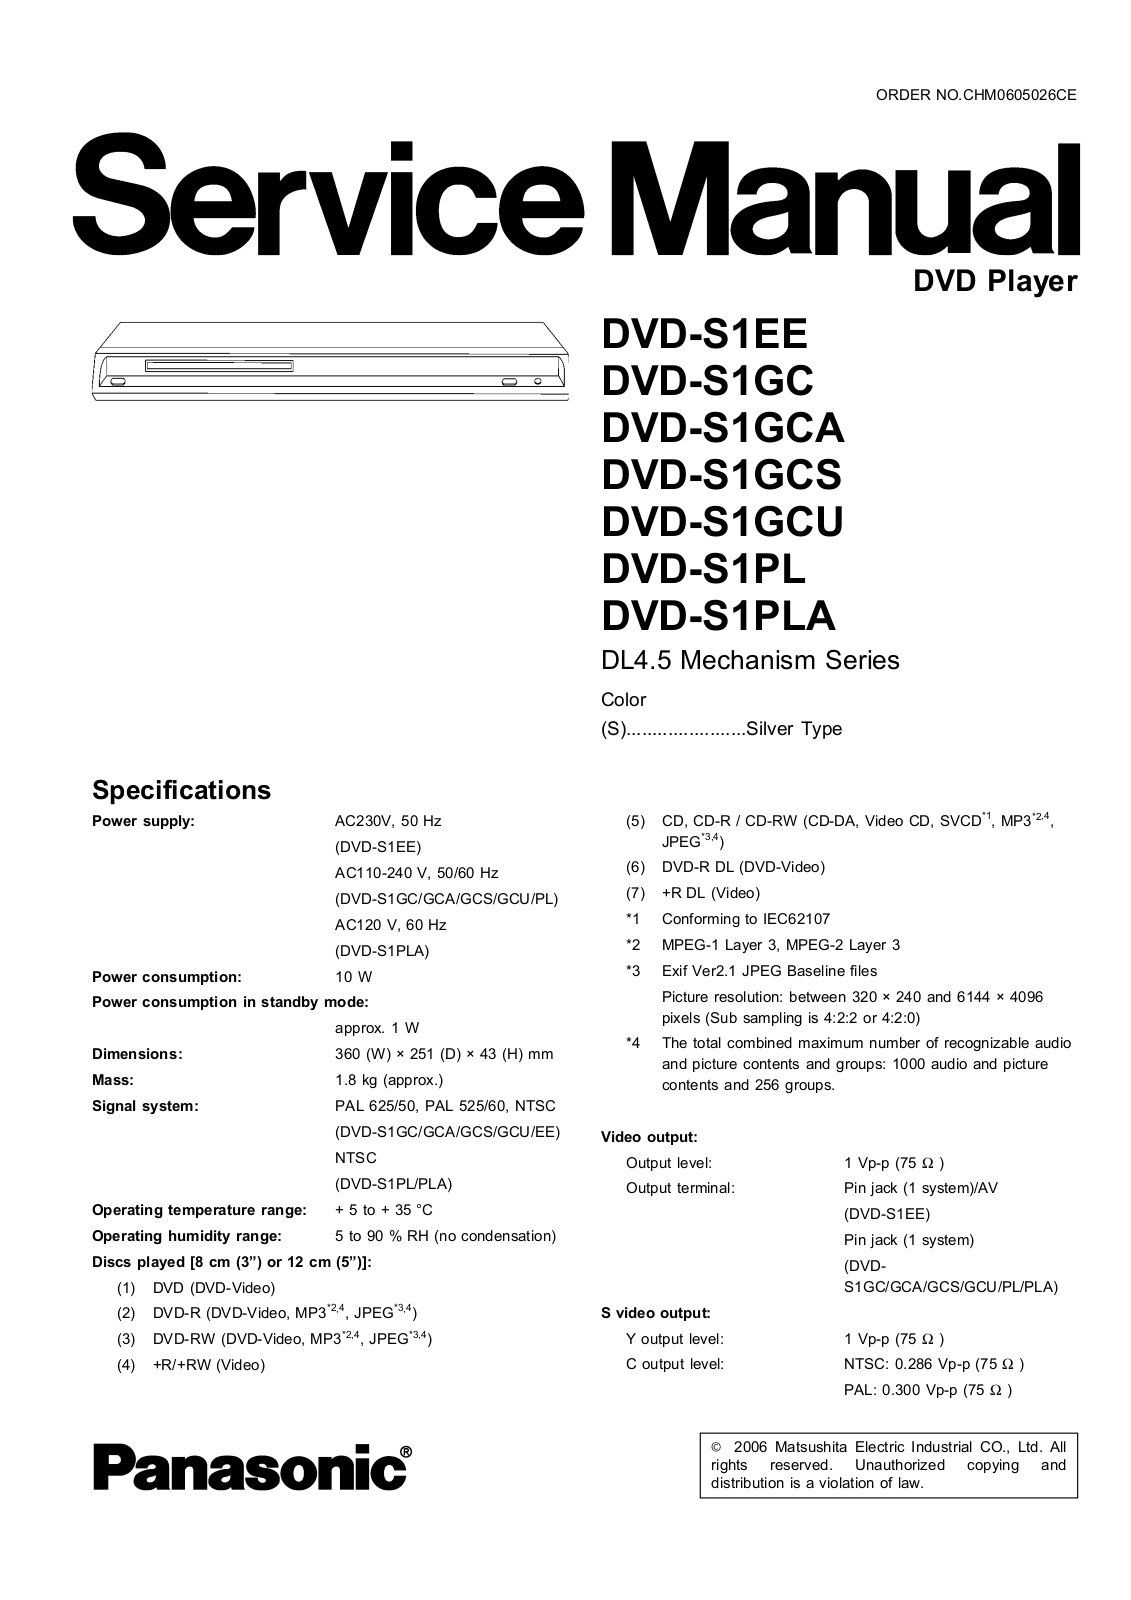 Panasonic DVDS-1-PL Service manual